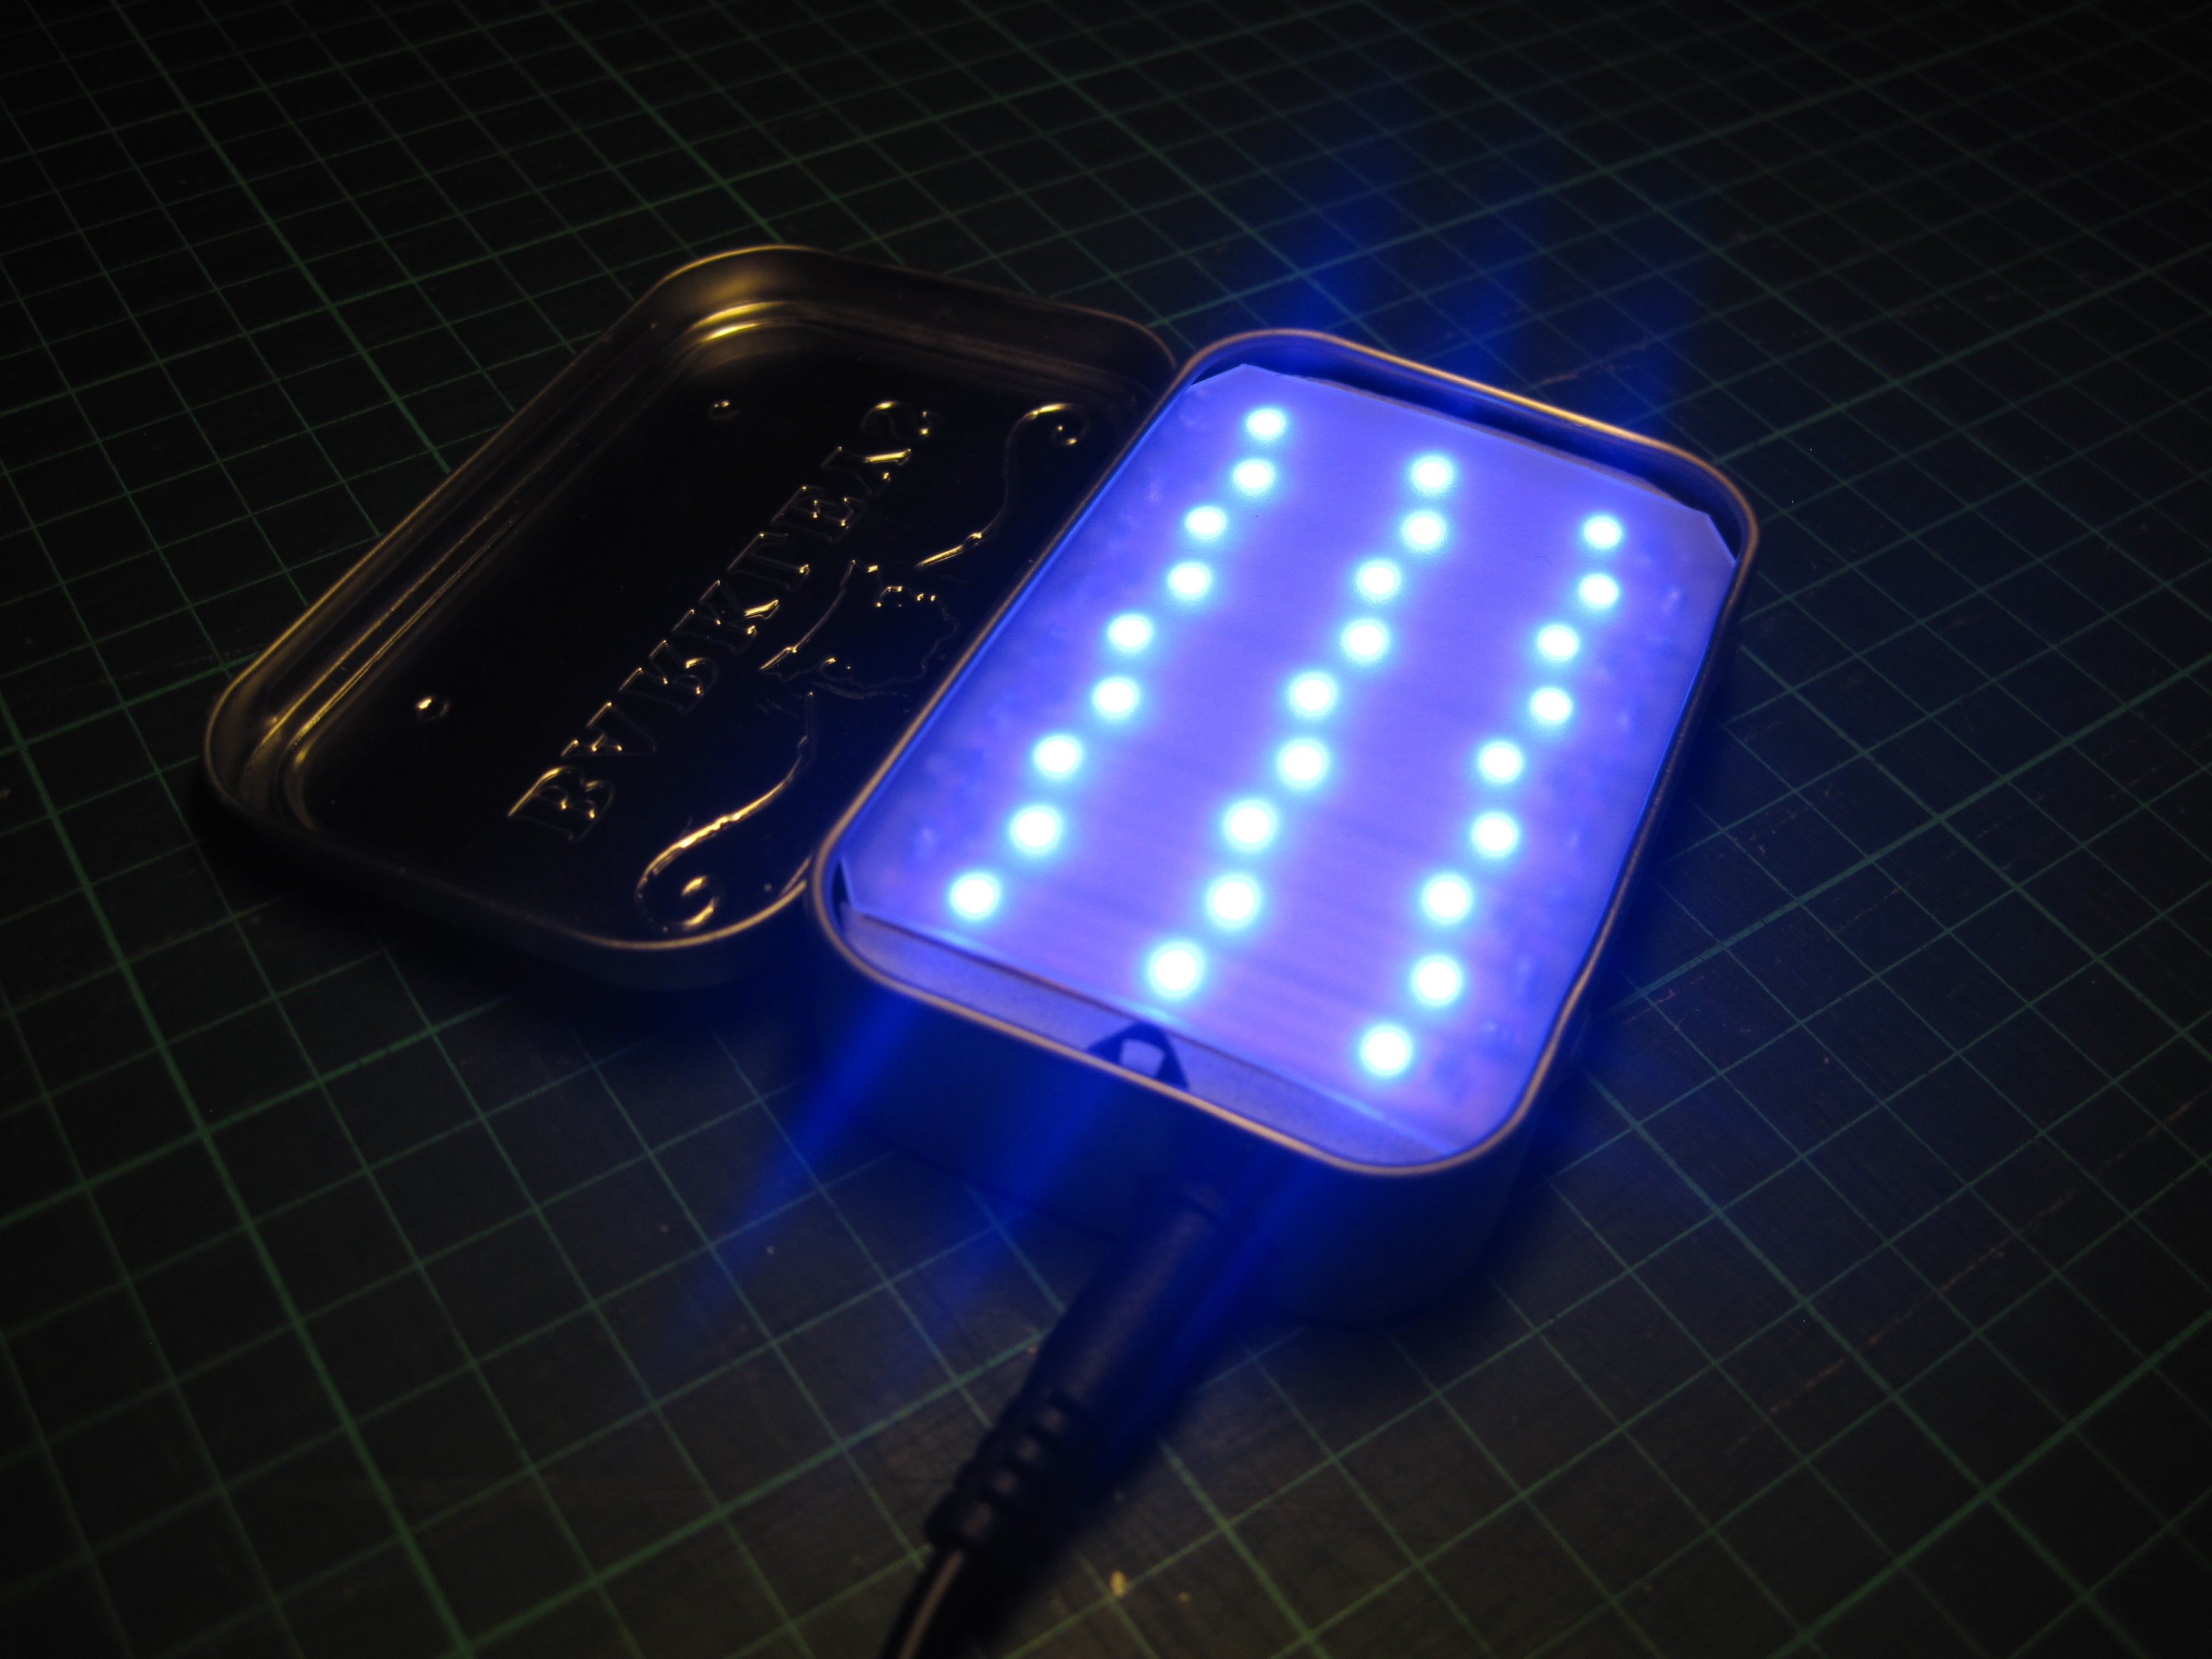 Blue LED Light Box in an Altoids(-like) Tin